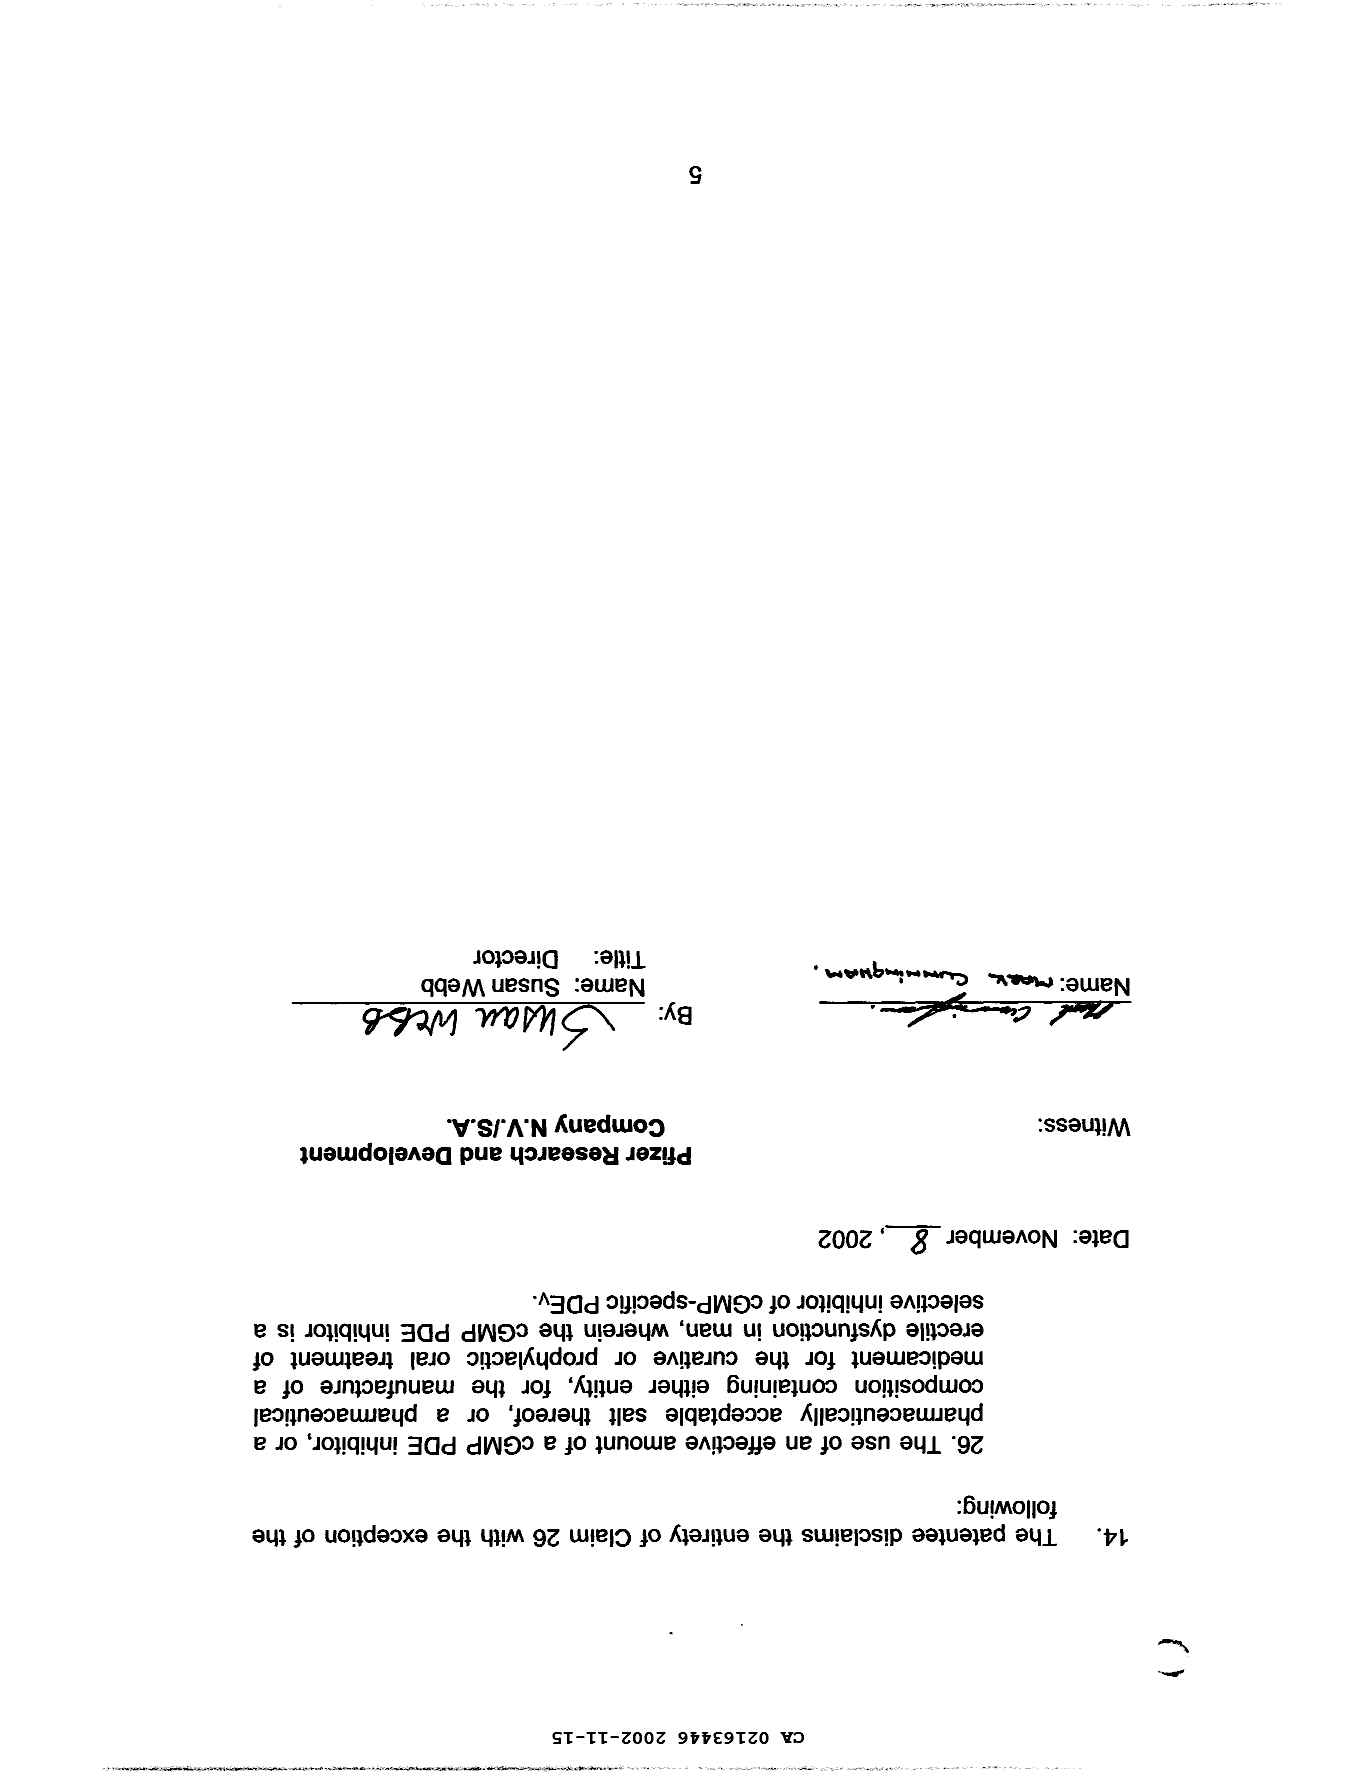 Canadian Patent Document 2163446. Correspondence 20011215. Image 8 of 8